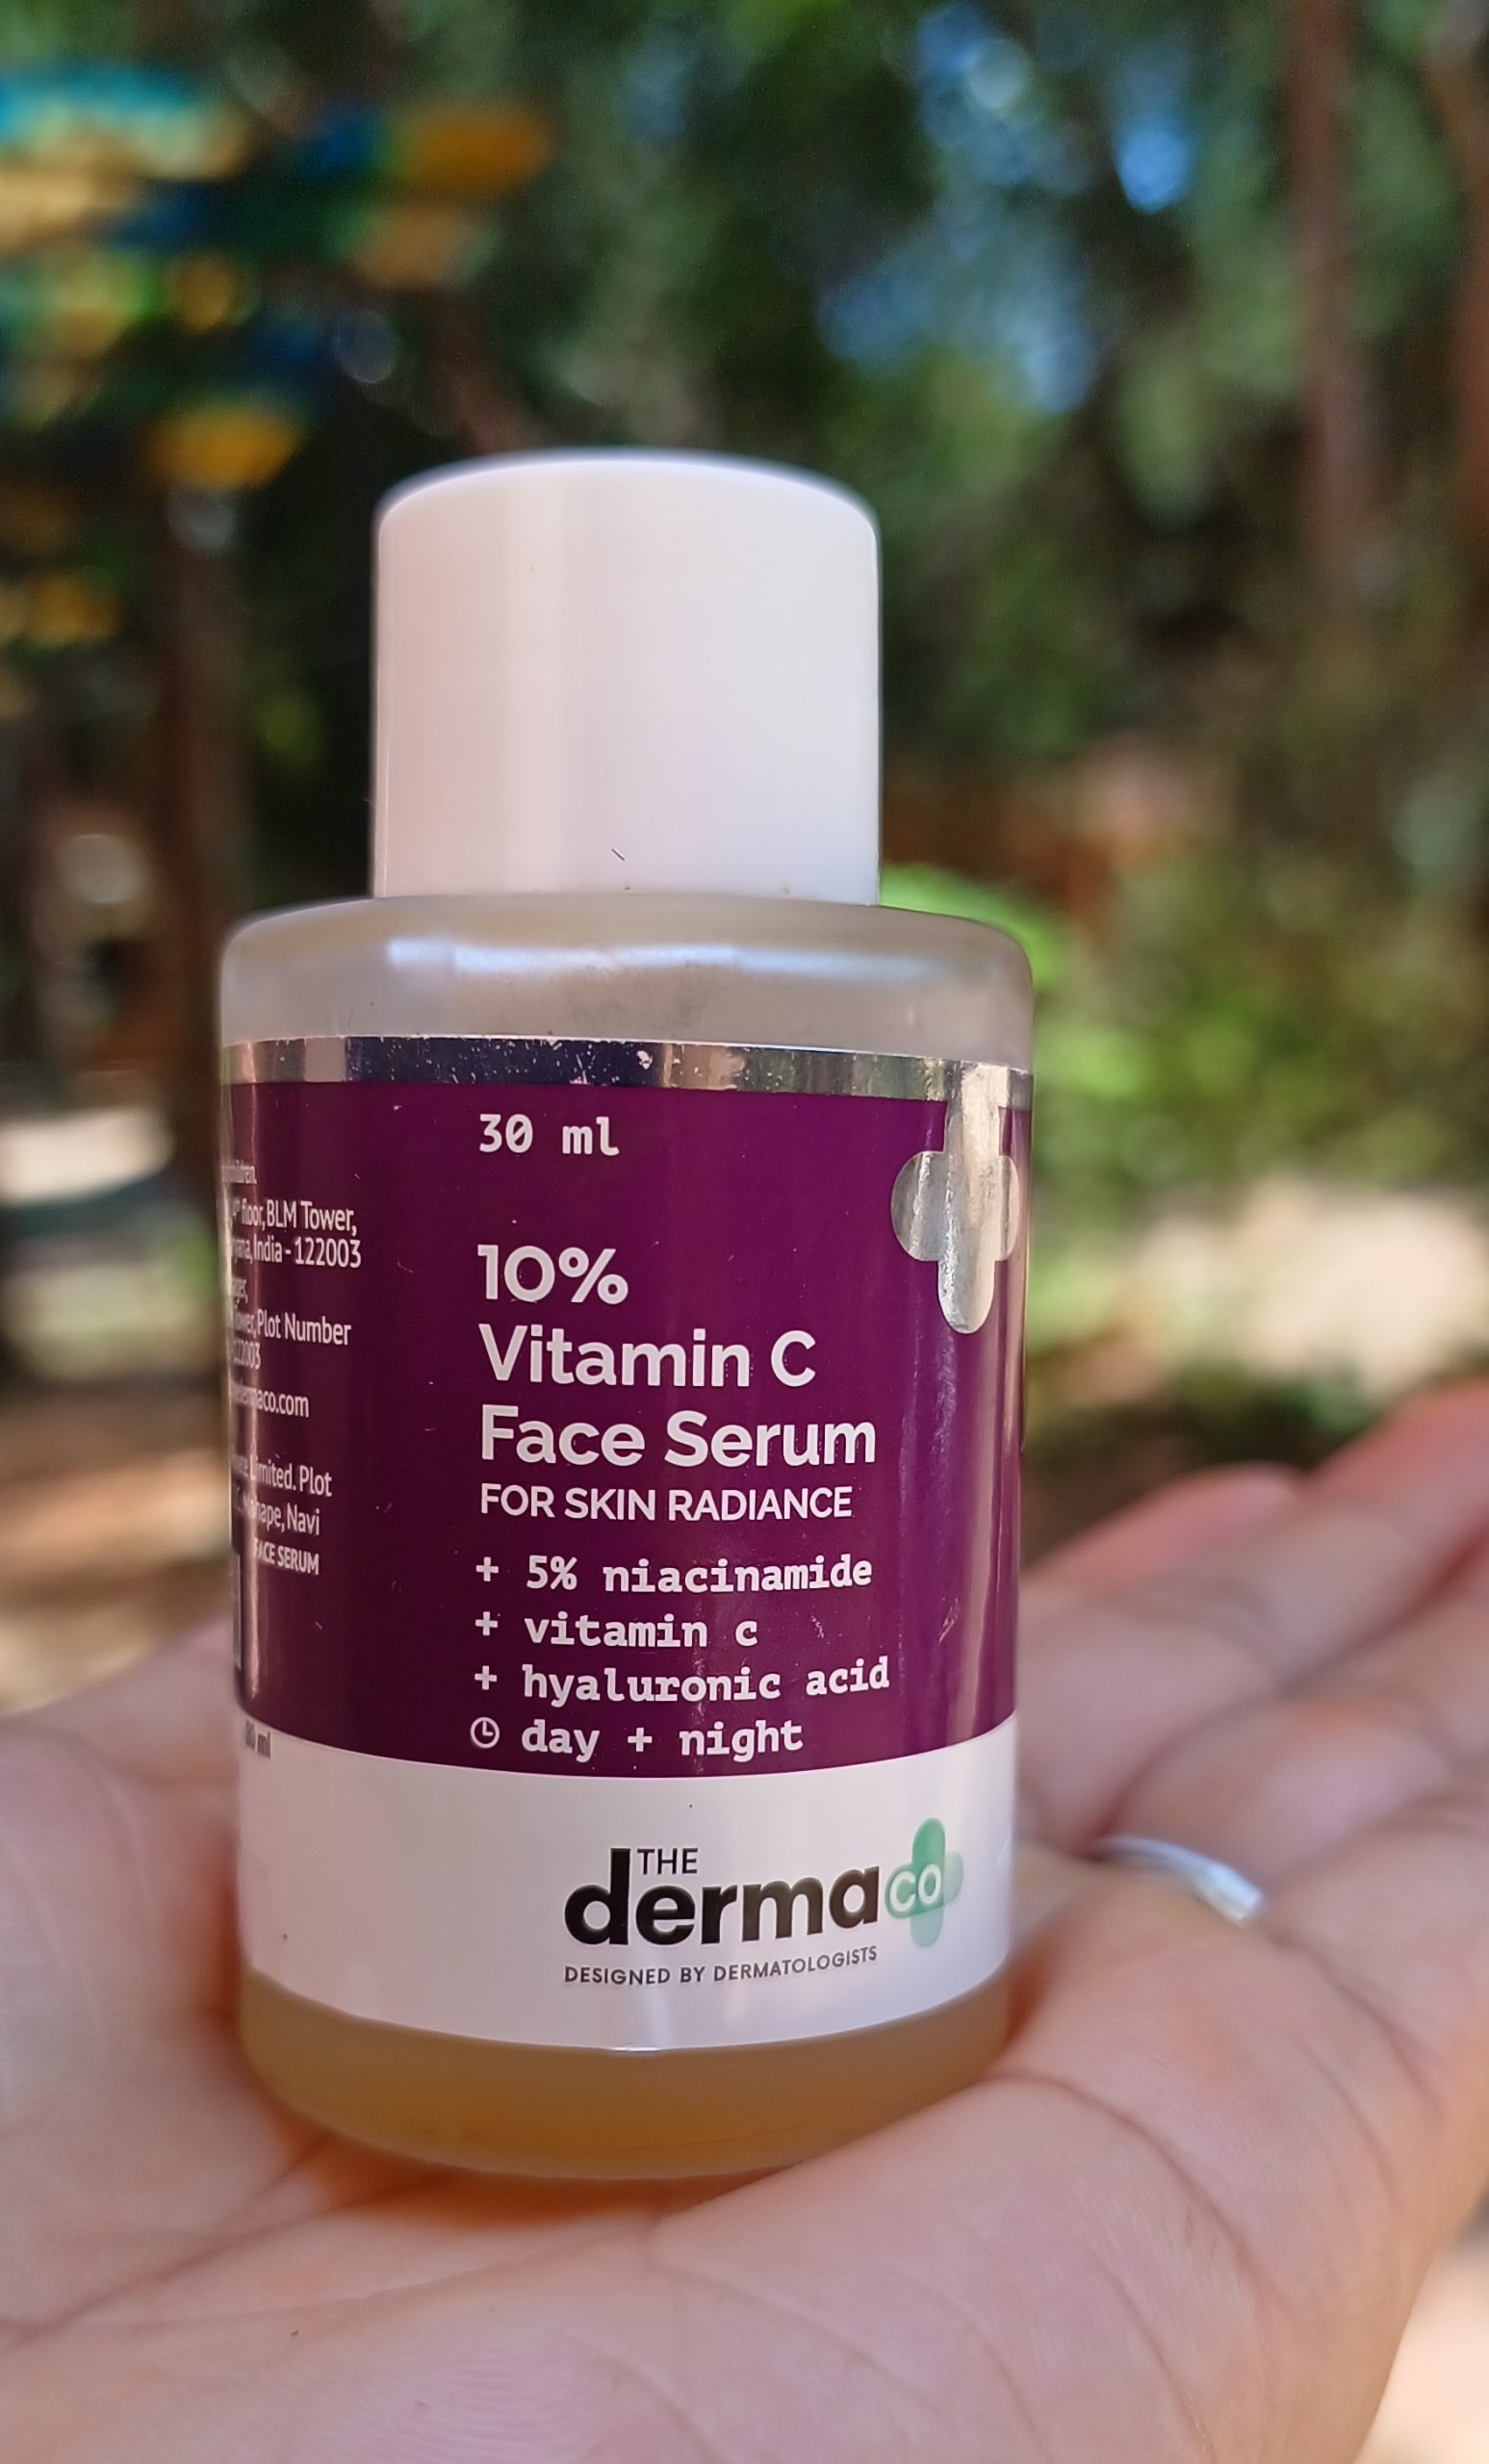 derma co 10% vitamin C face serum review